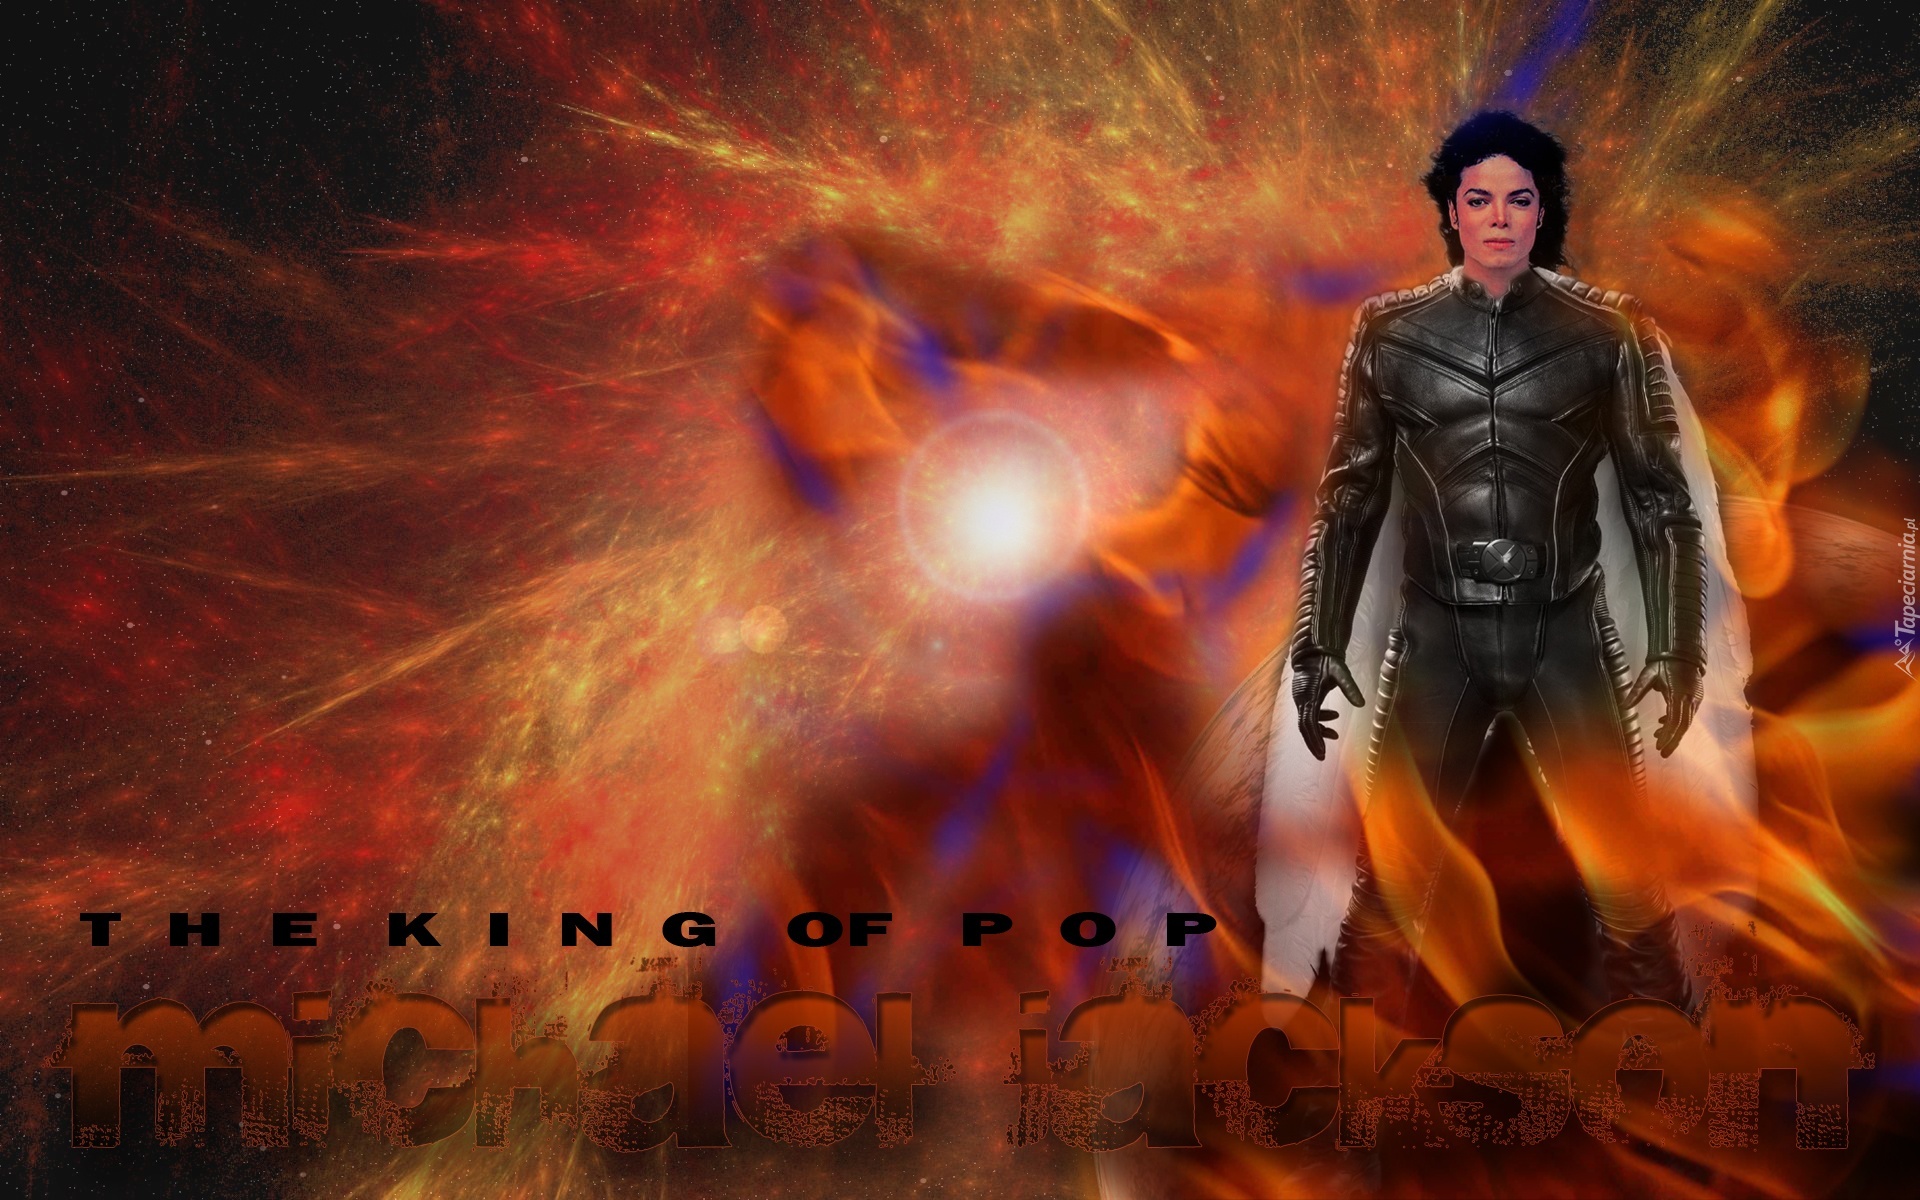 Michael Jackson, The King of pop